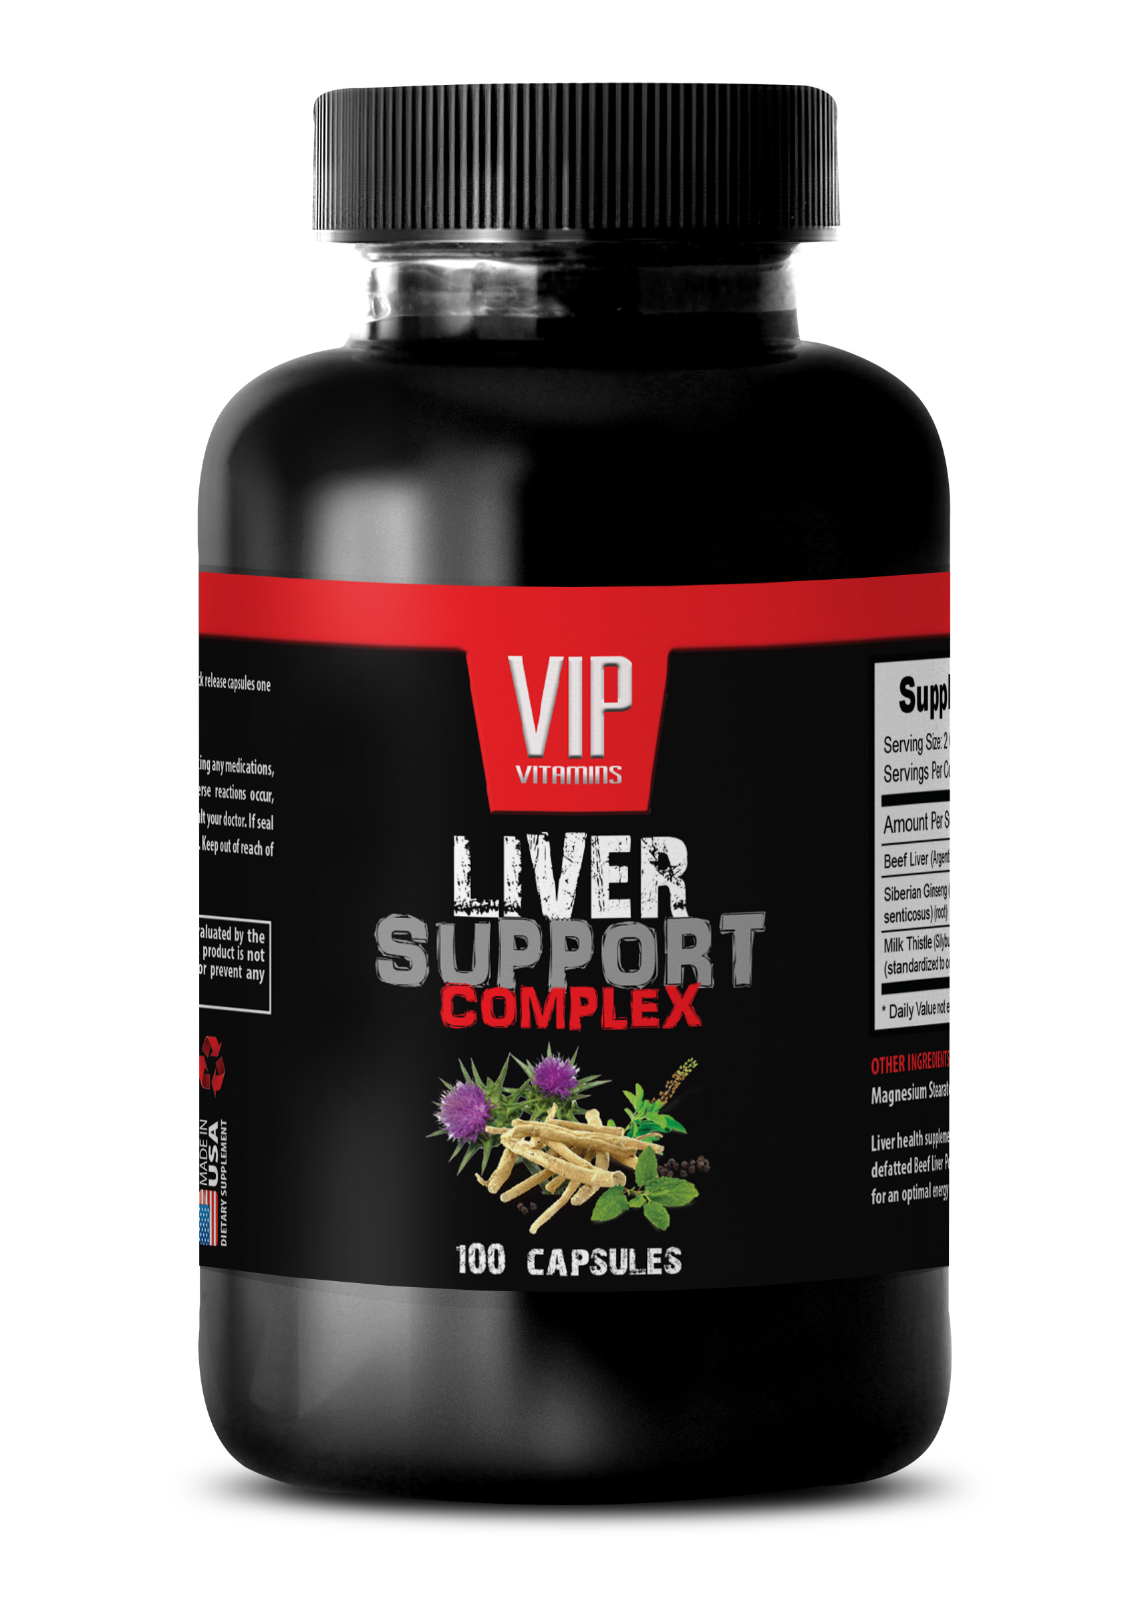 anti inflammatory herbal blend - liver complex 1200mg - milk thistle powder - 1b